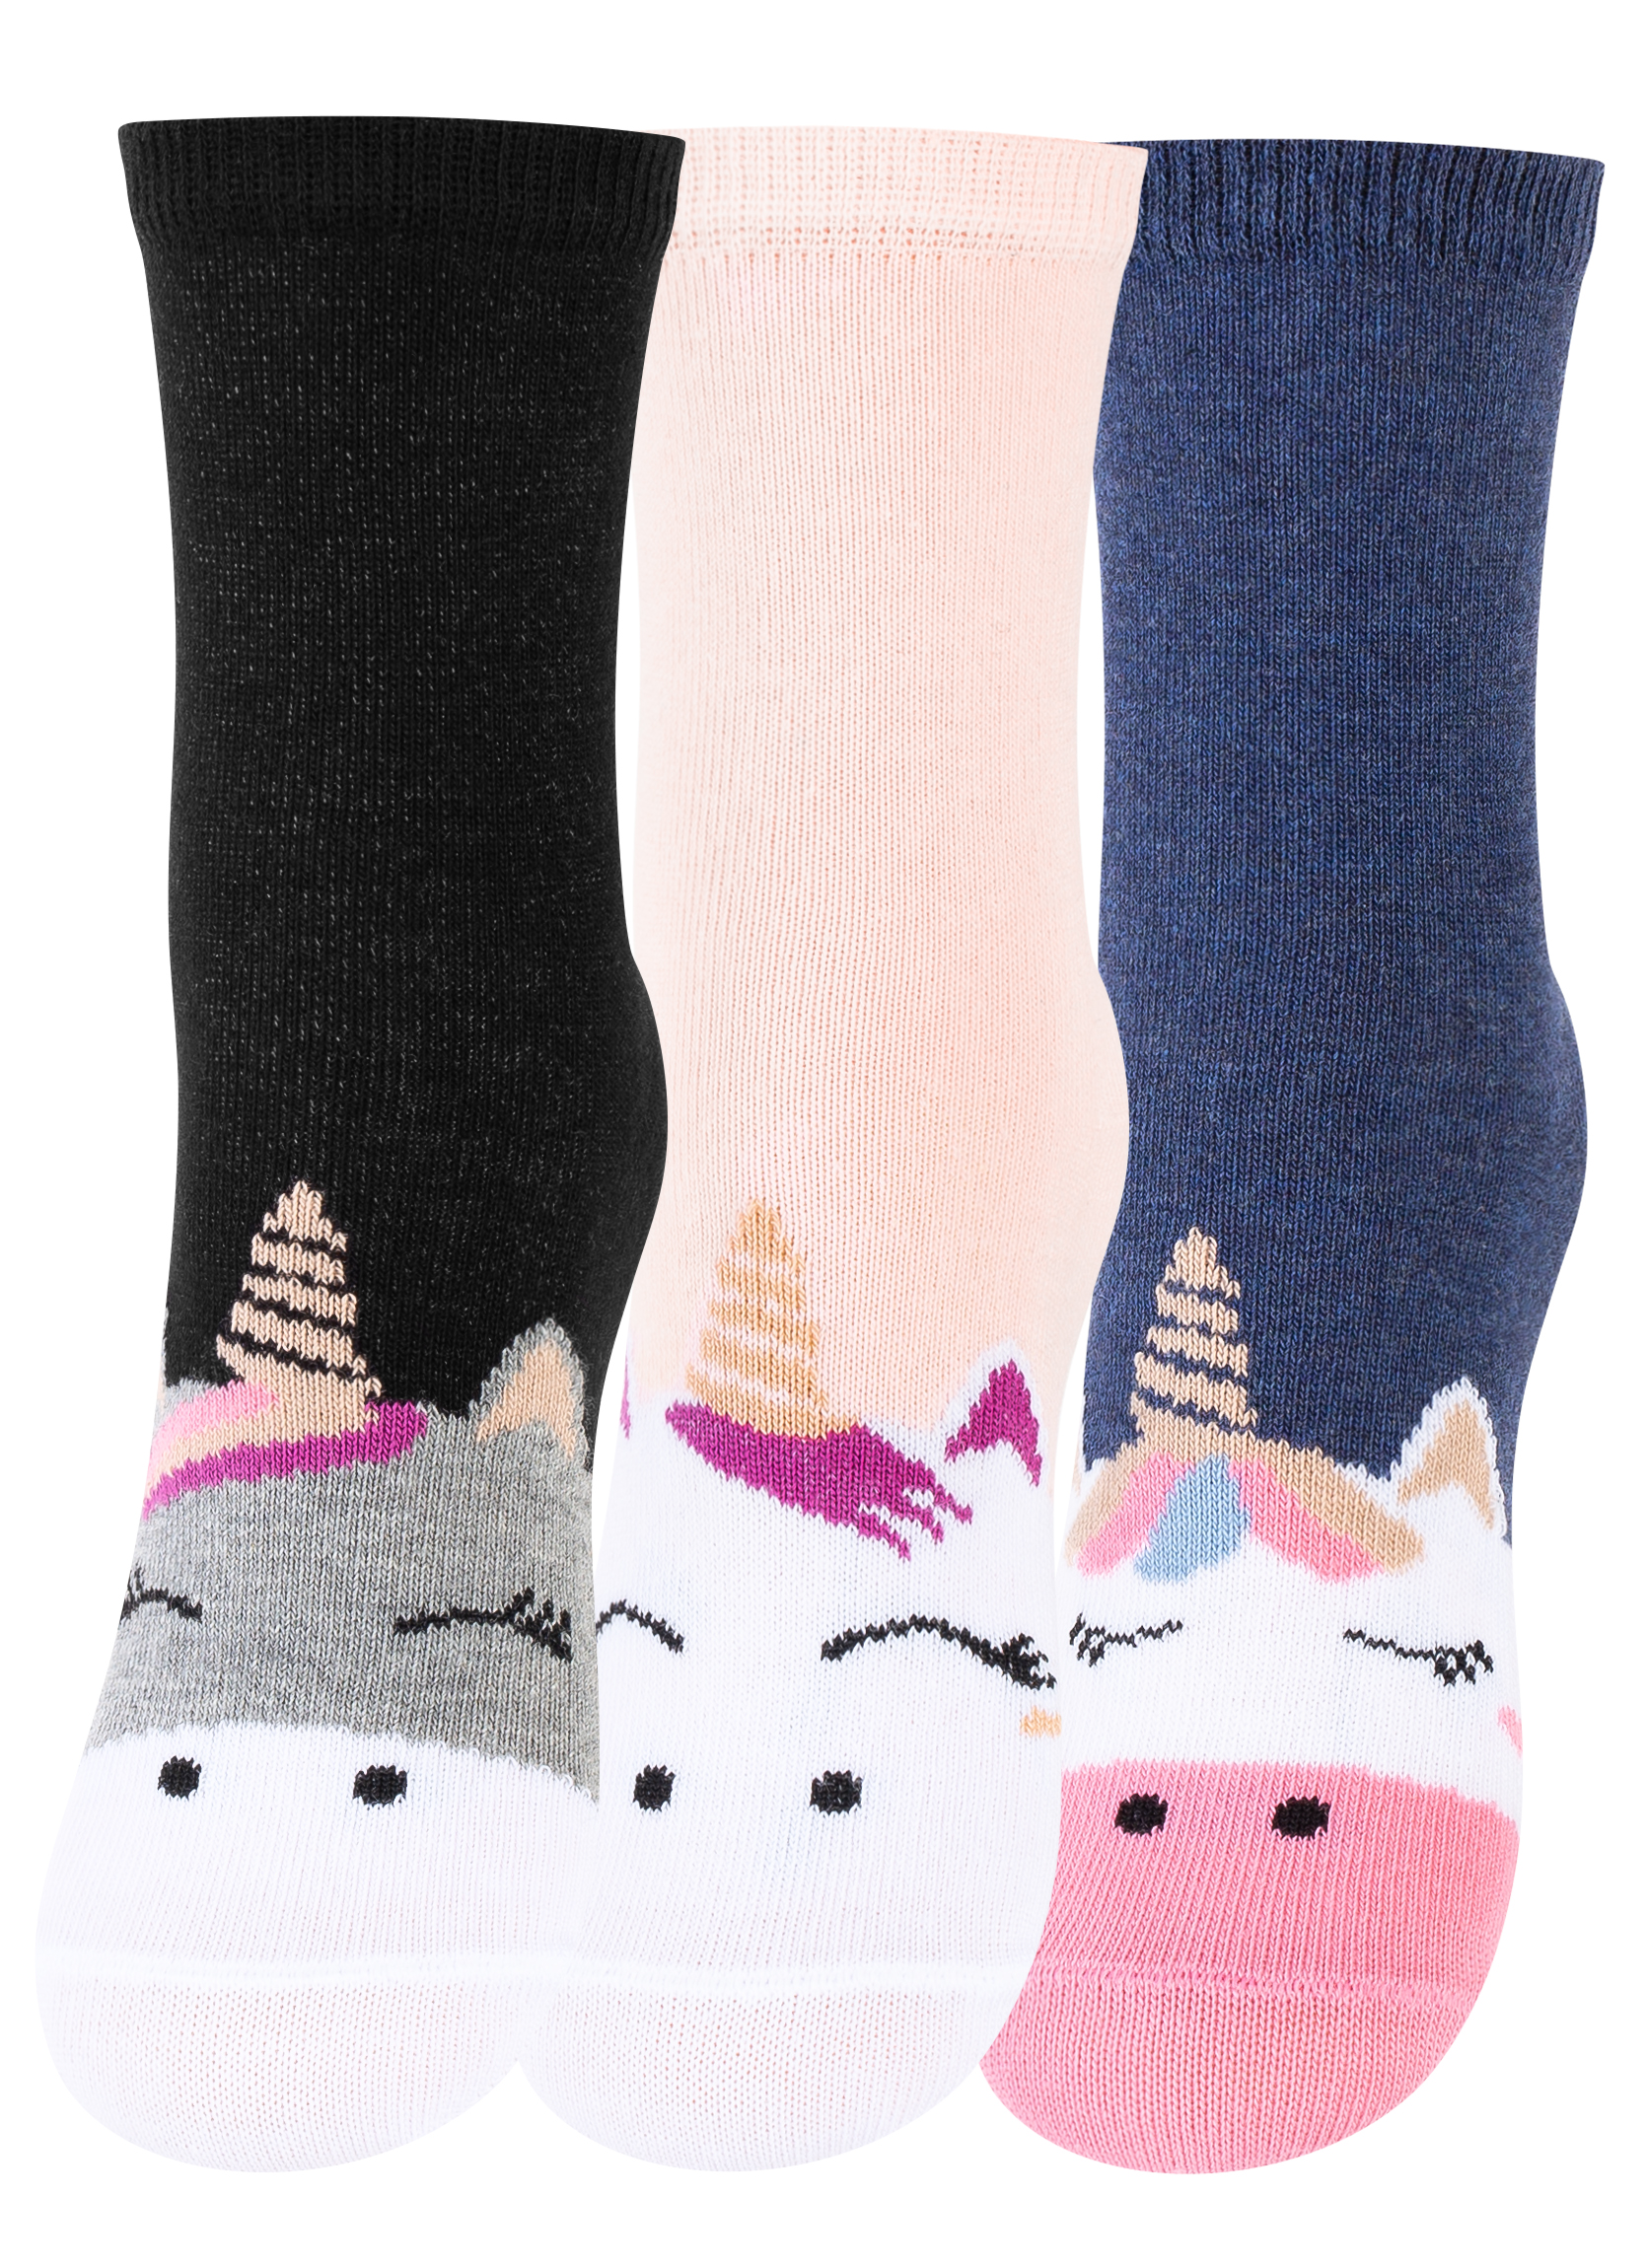 Paar | Strumpfwaren Kinder | Söckchen KINDER Socken | 6 - Einhorn